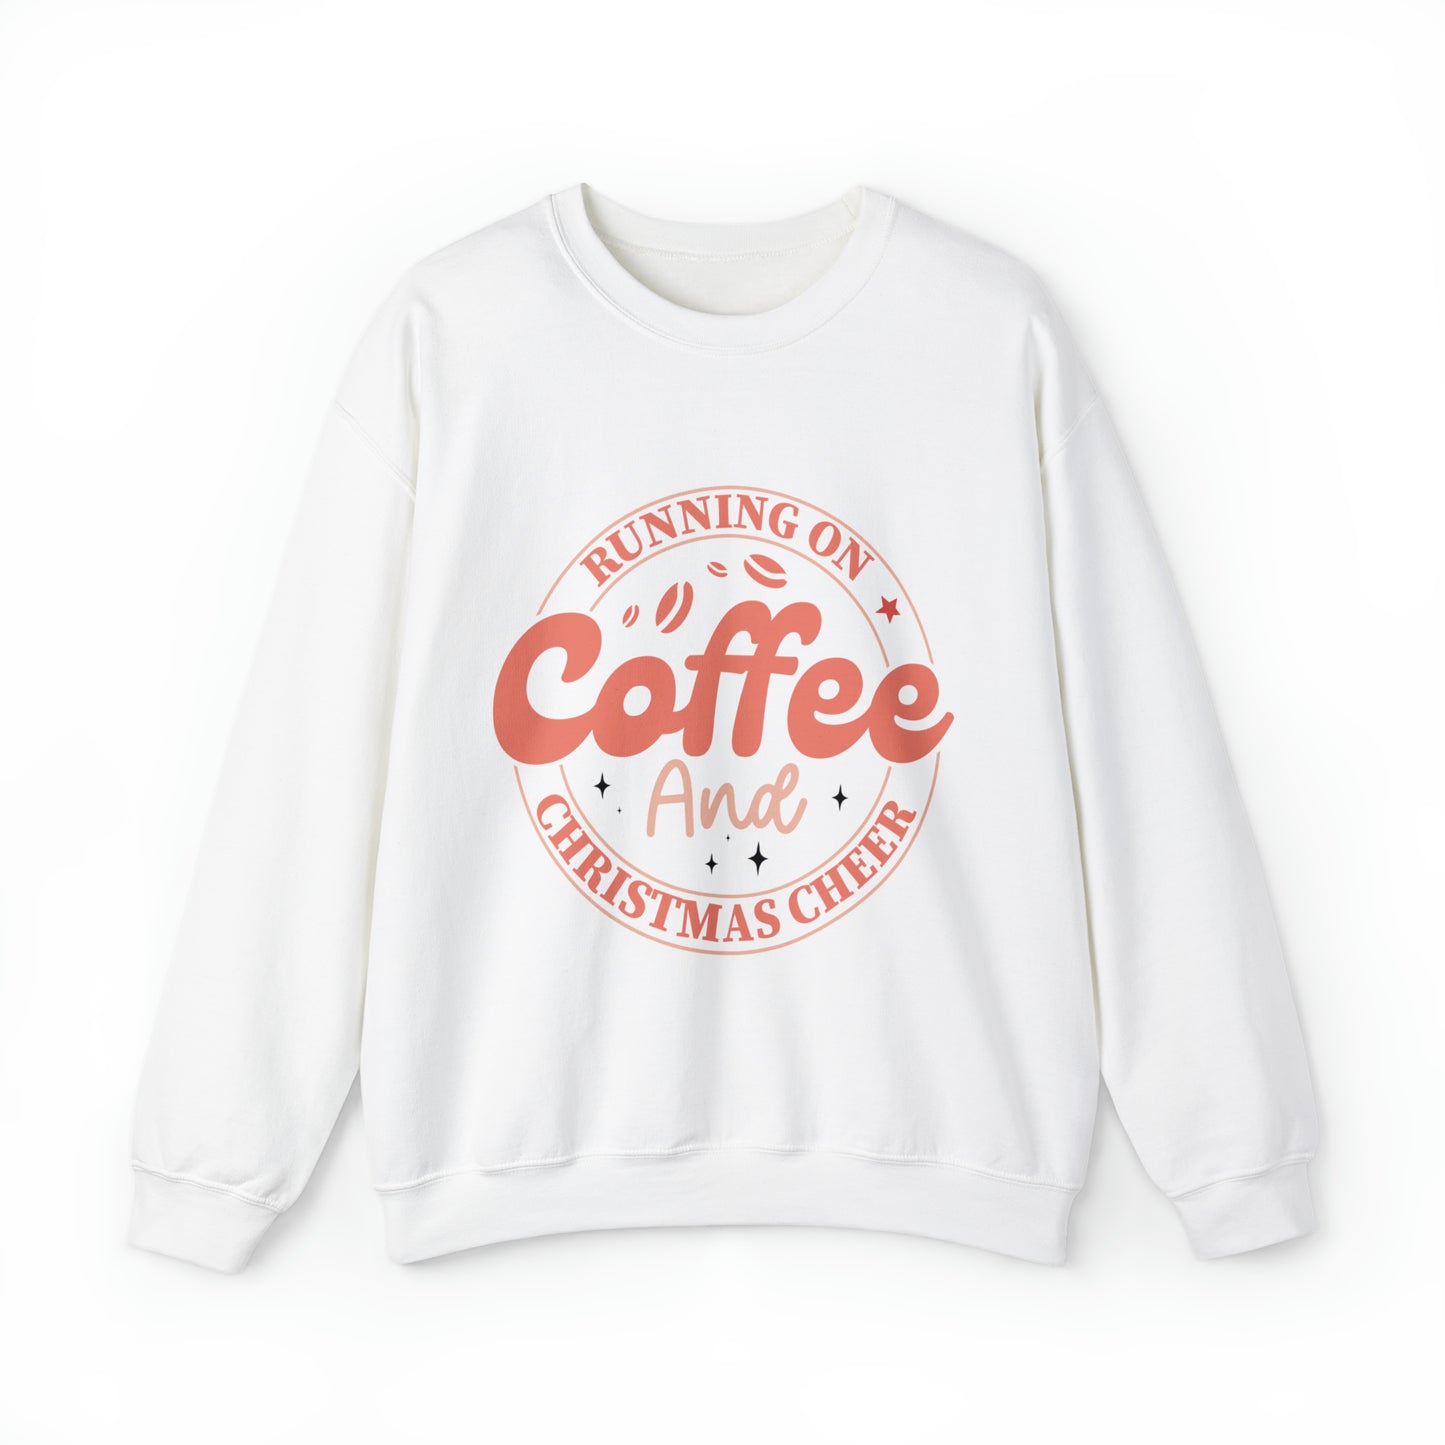 Running on Coffee and Christmas Cheer Women's Funny Christmas Crewneck Sweatshirt